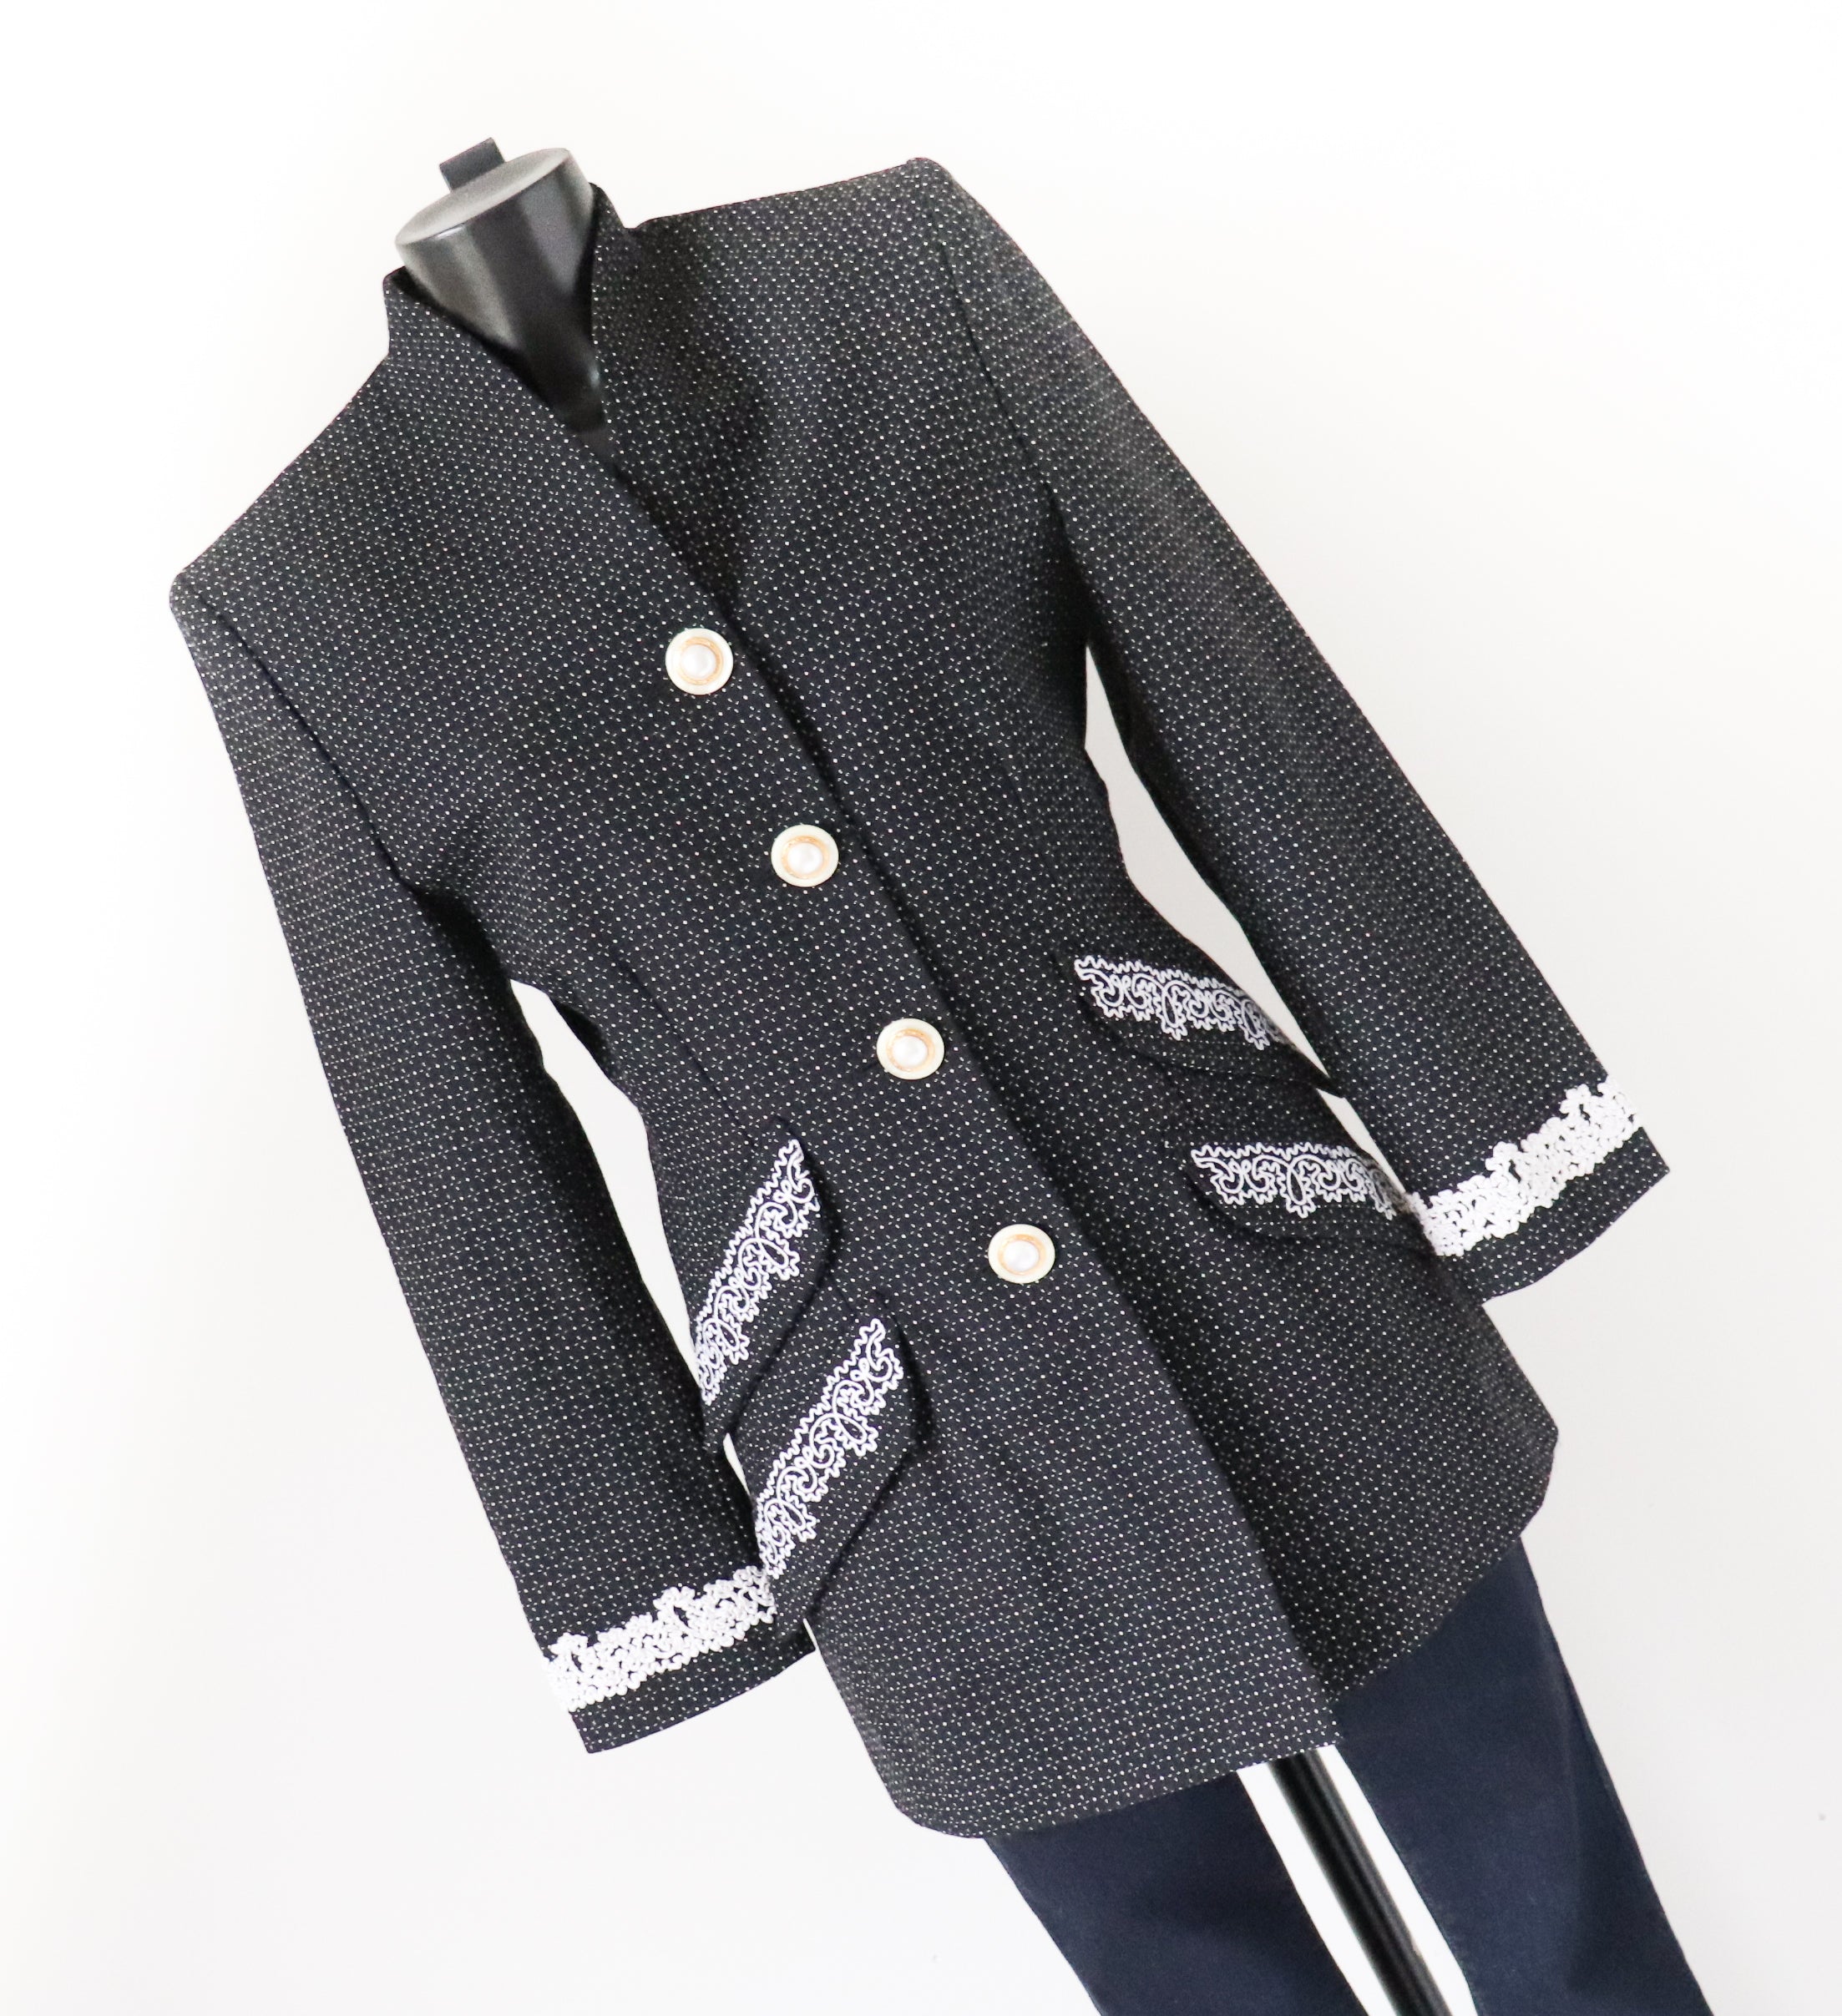 Karen Collarless Suit Jacket - Woven Wool - Black Spotted - XS / S - UK 8 / 10